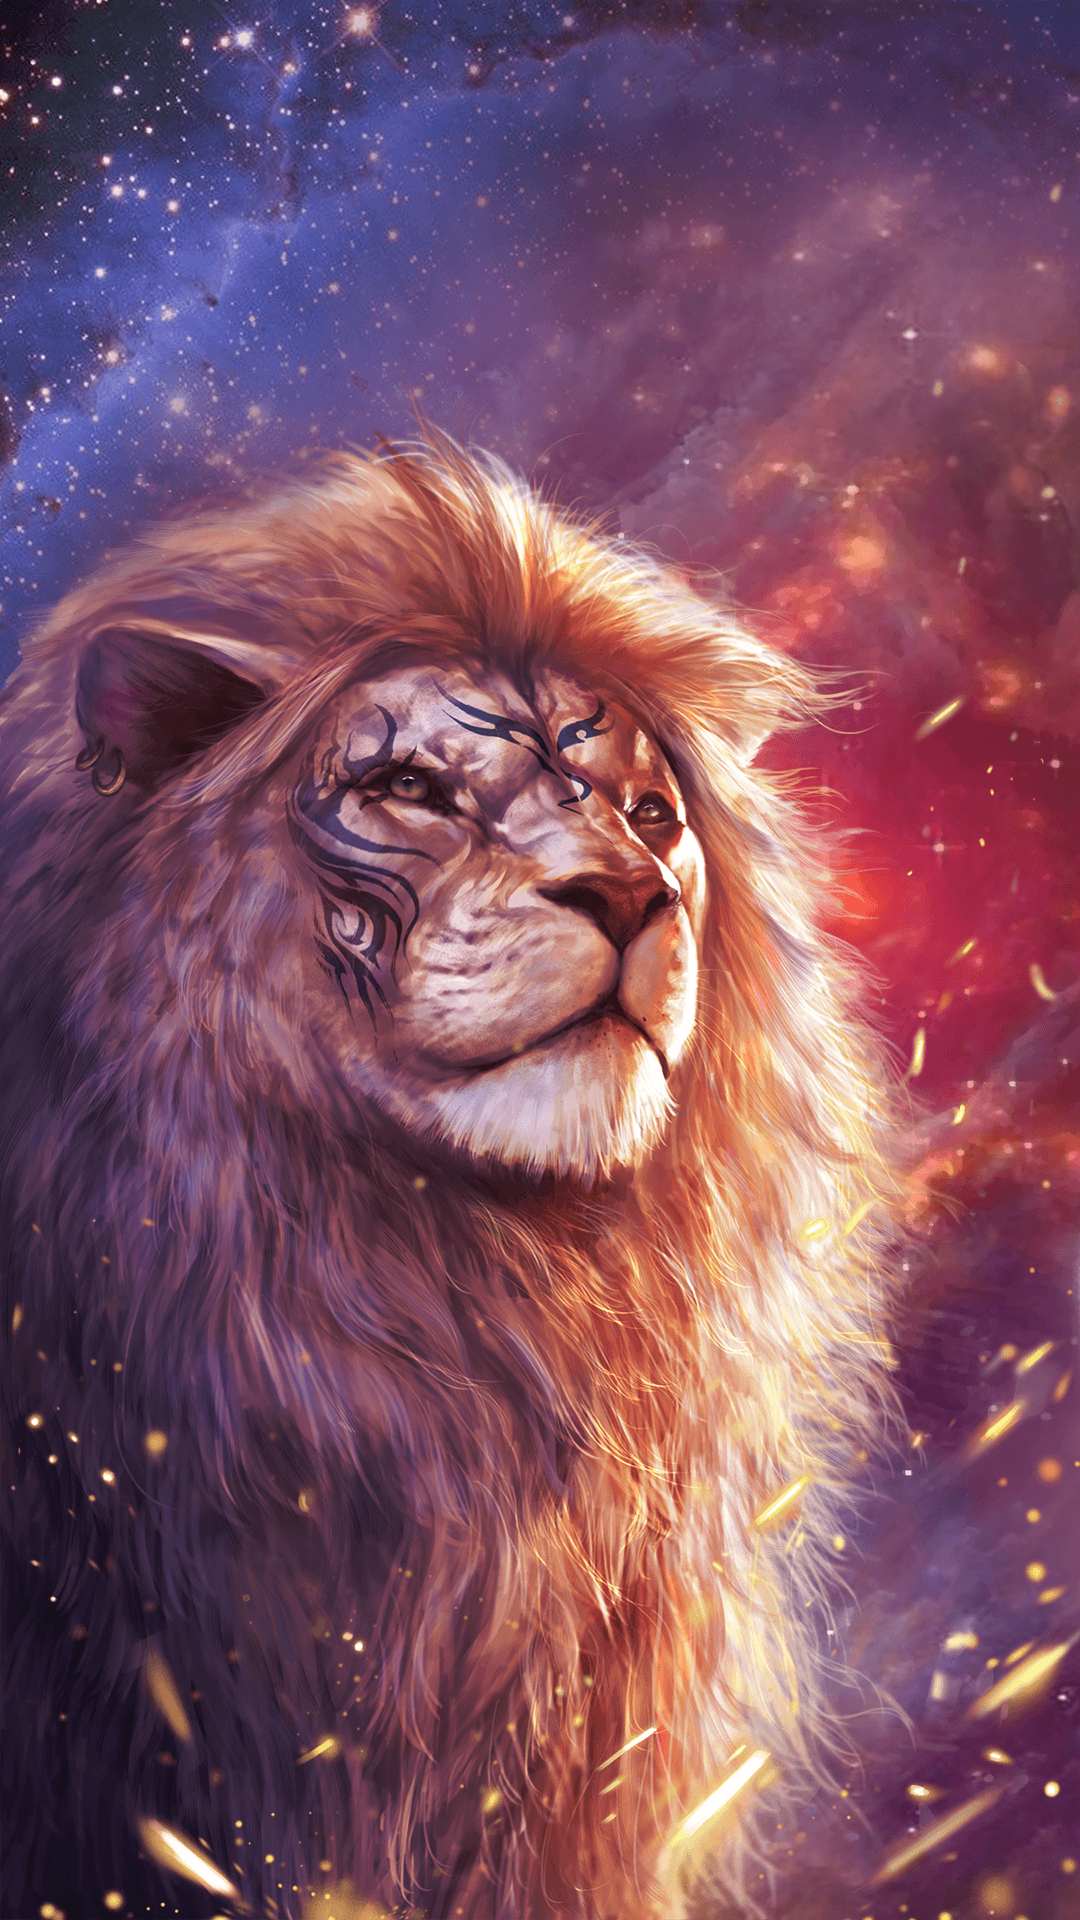 Black lion by Leno00 on DeviantArt